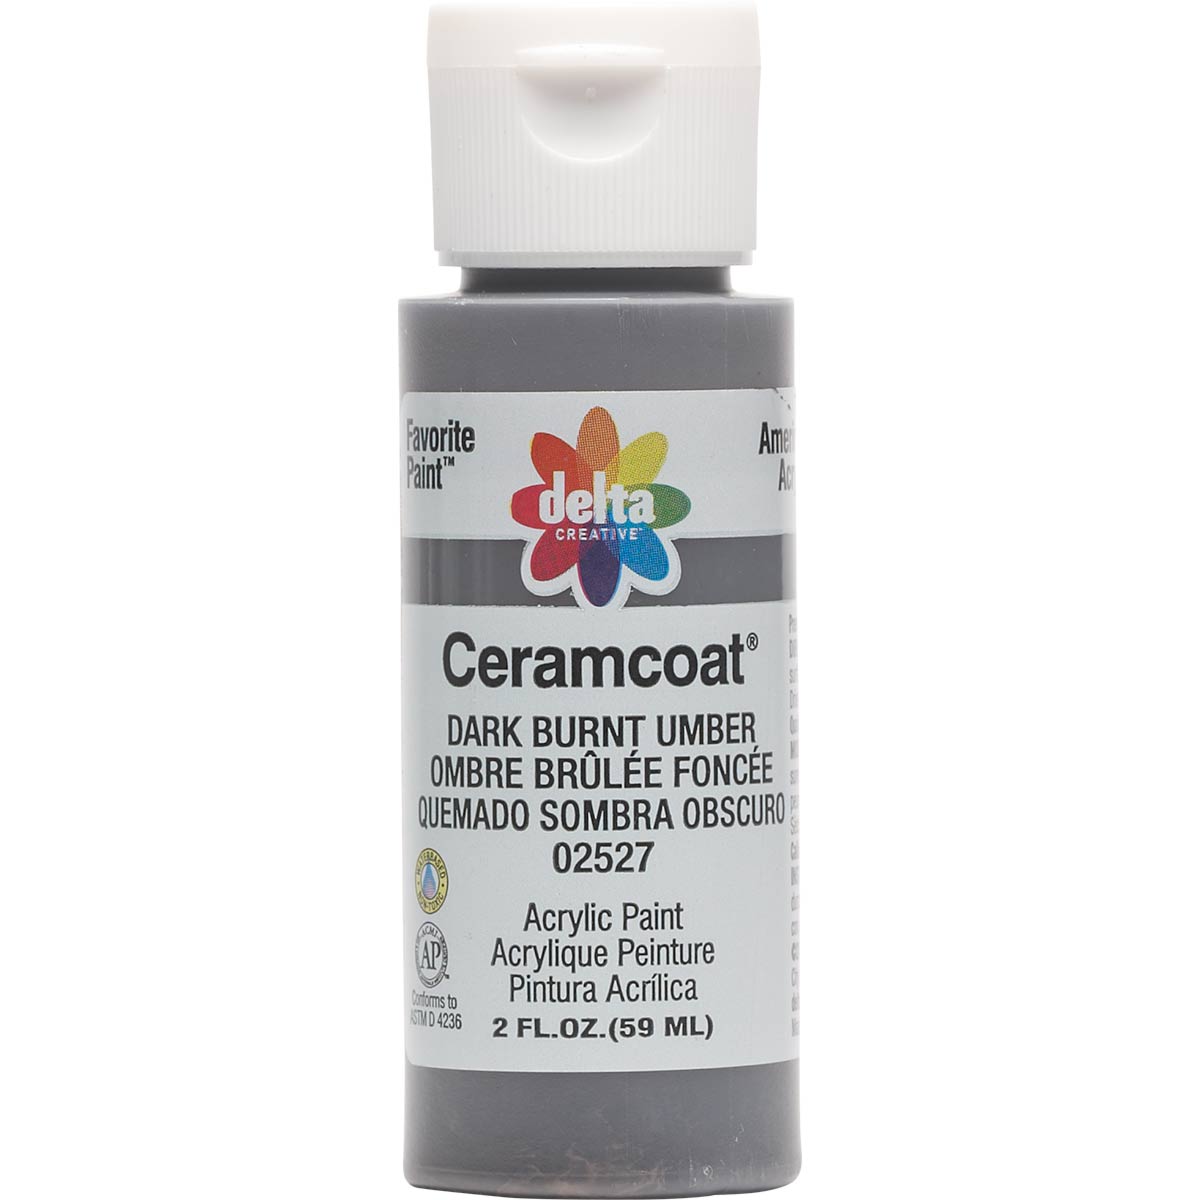 Delta Ceramcoat Acrylic Paint - Dark Burnt Umber, 2 oz. - 025270202W